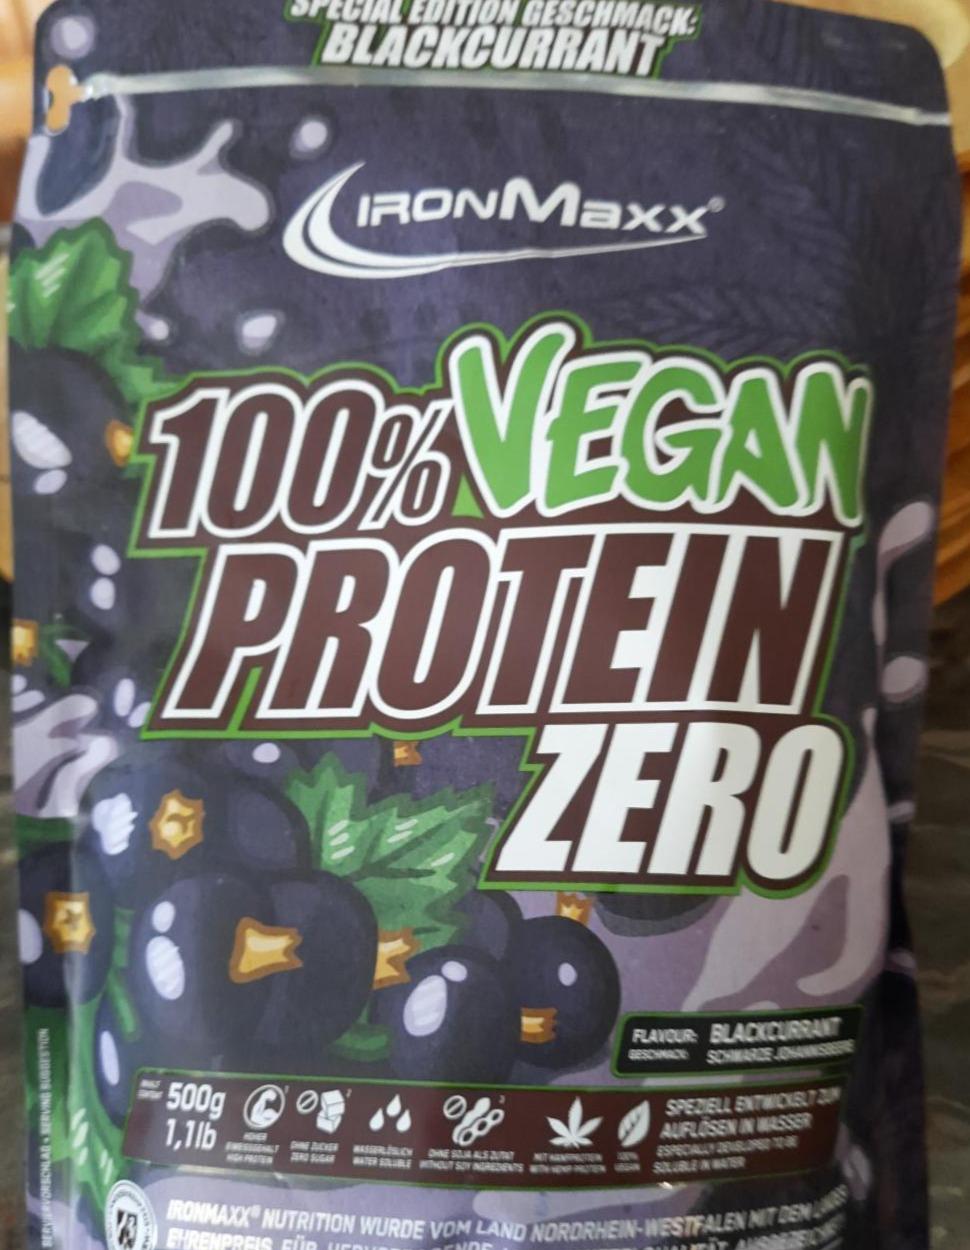 Fotografie - 100% Vegan protein Zero Blackcurrant IronMaxx